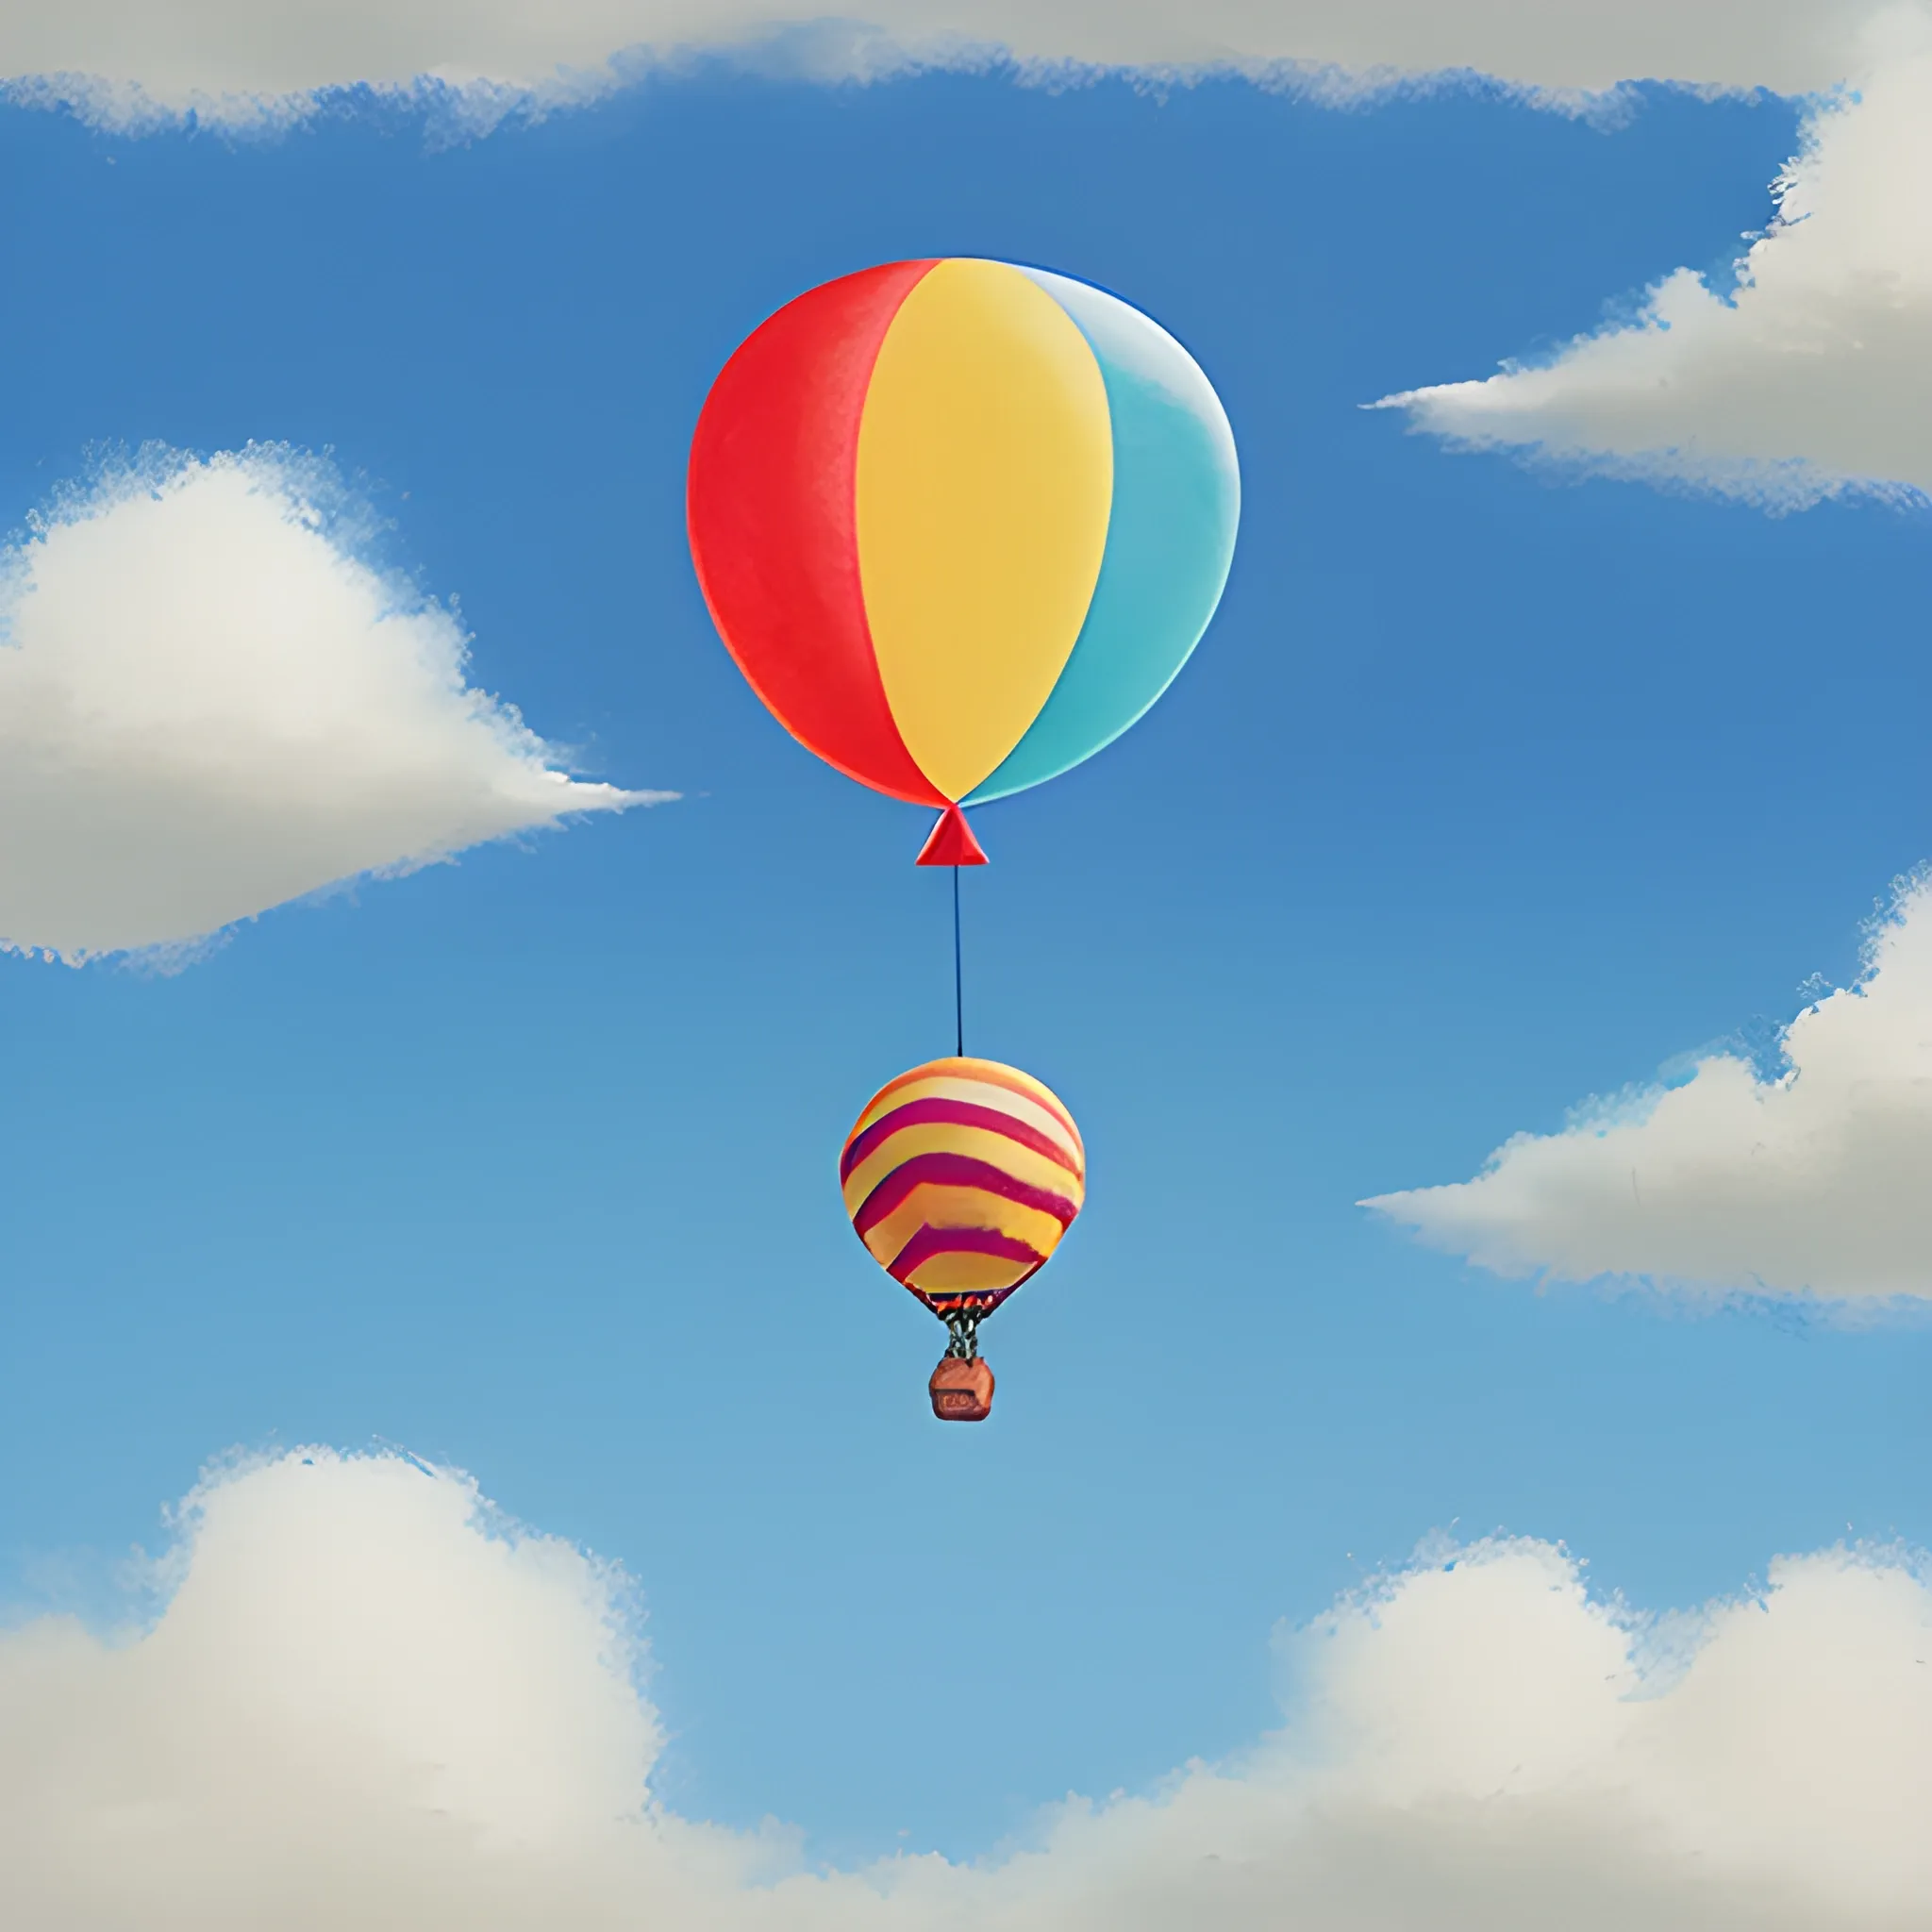 Balloon in the sky.